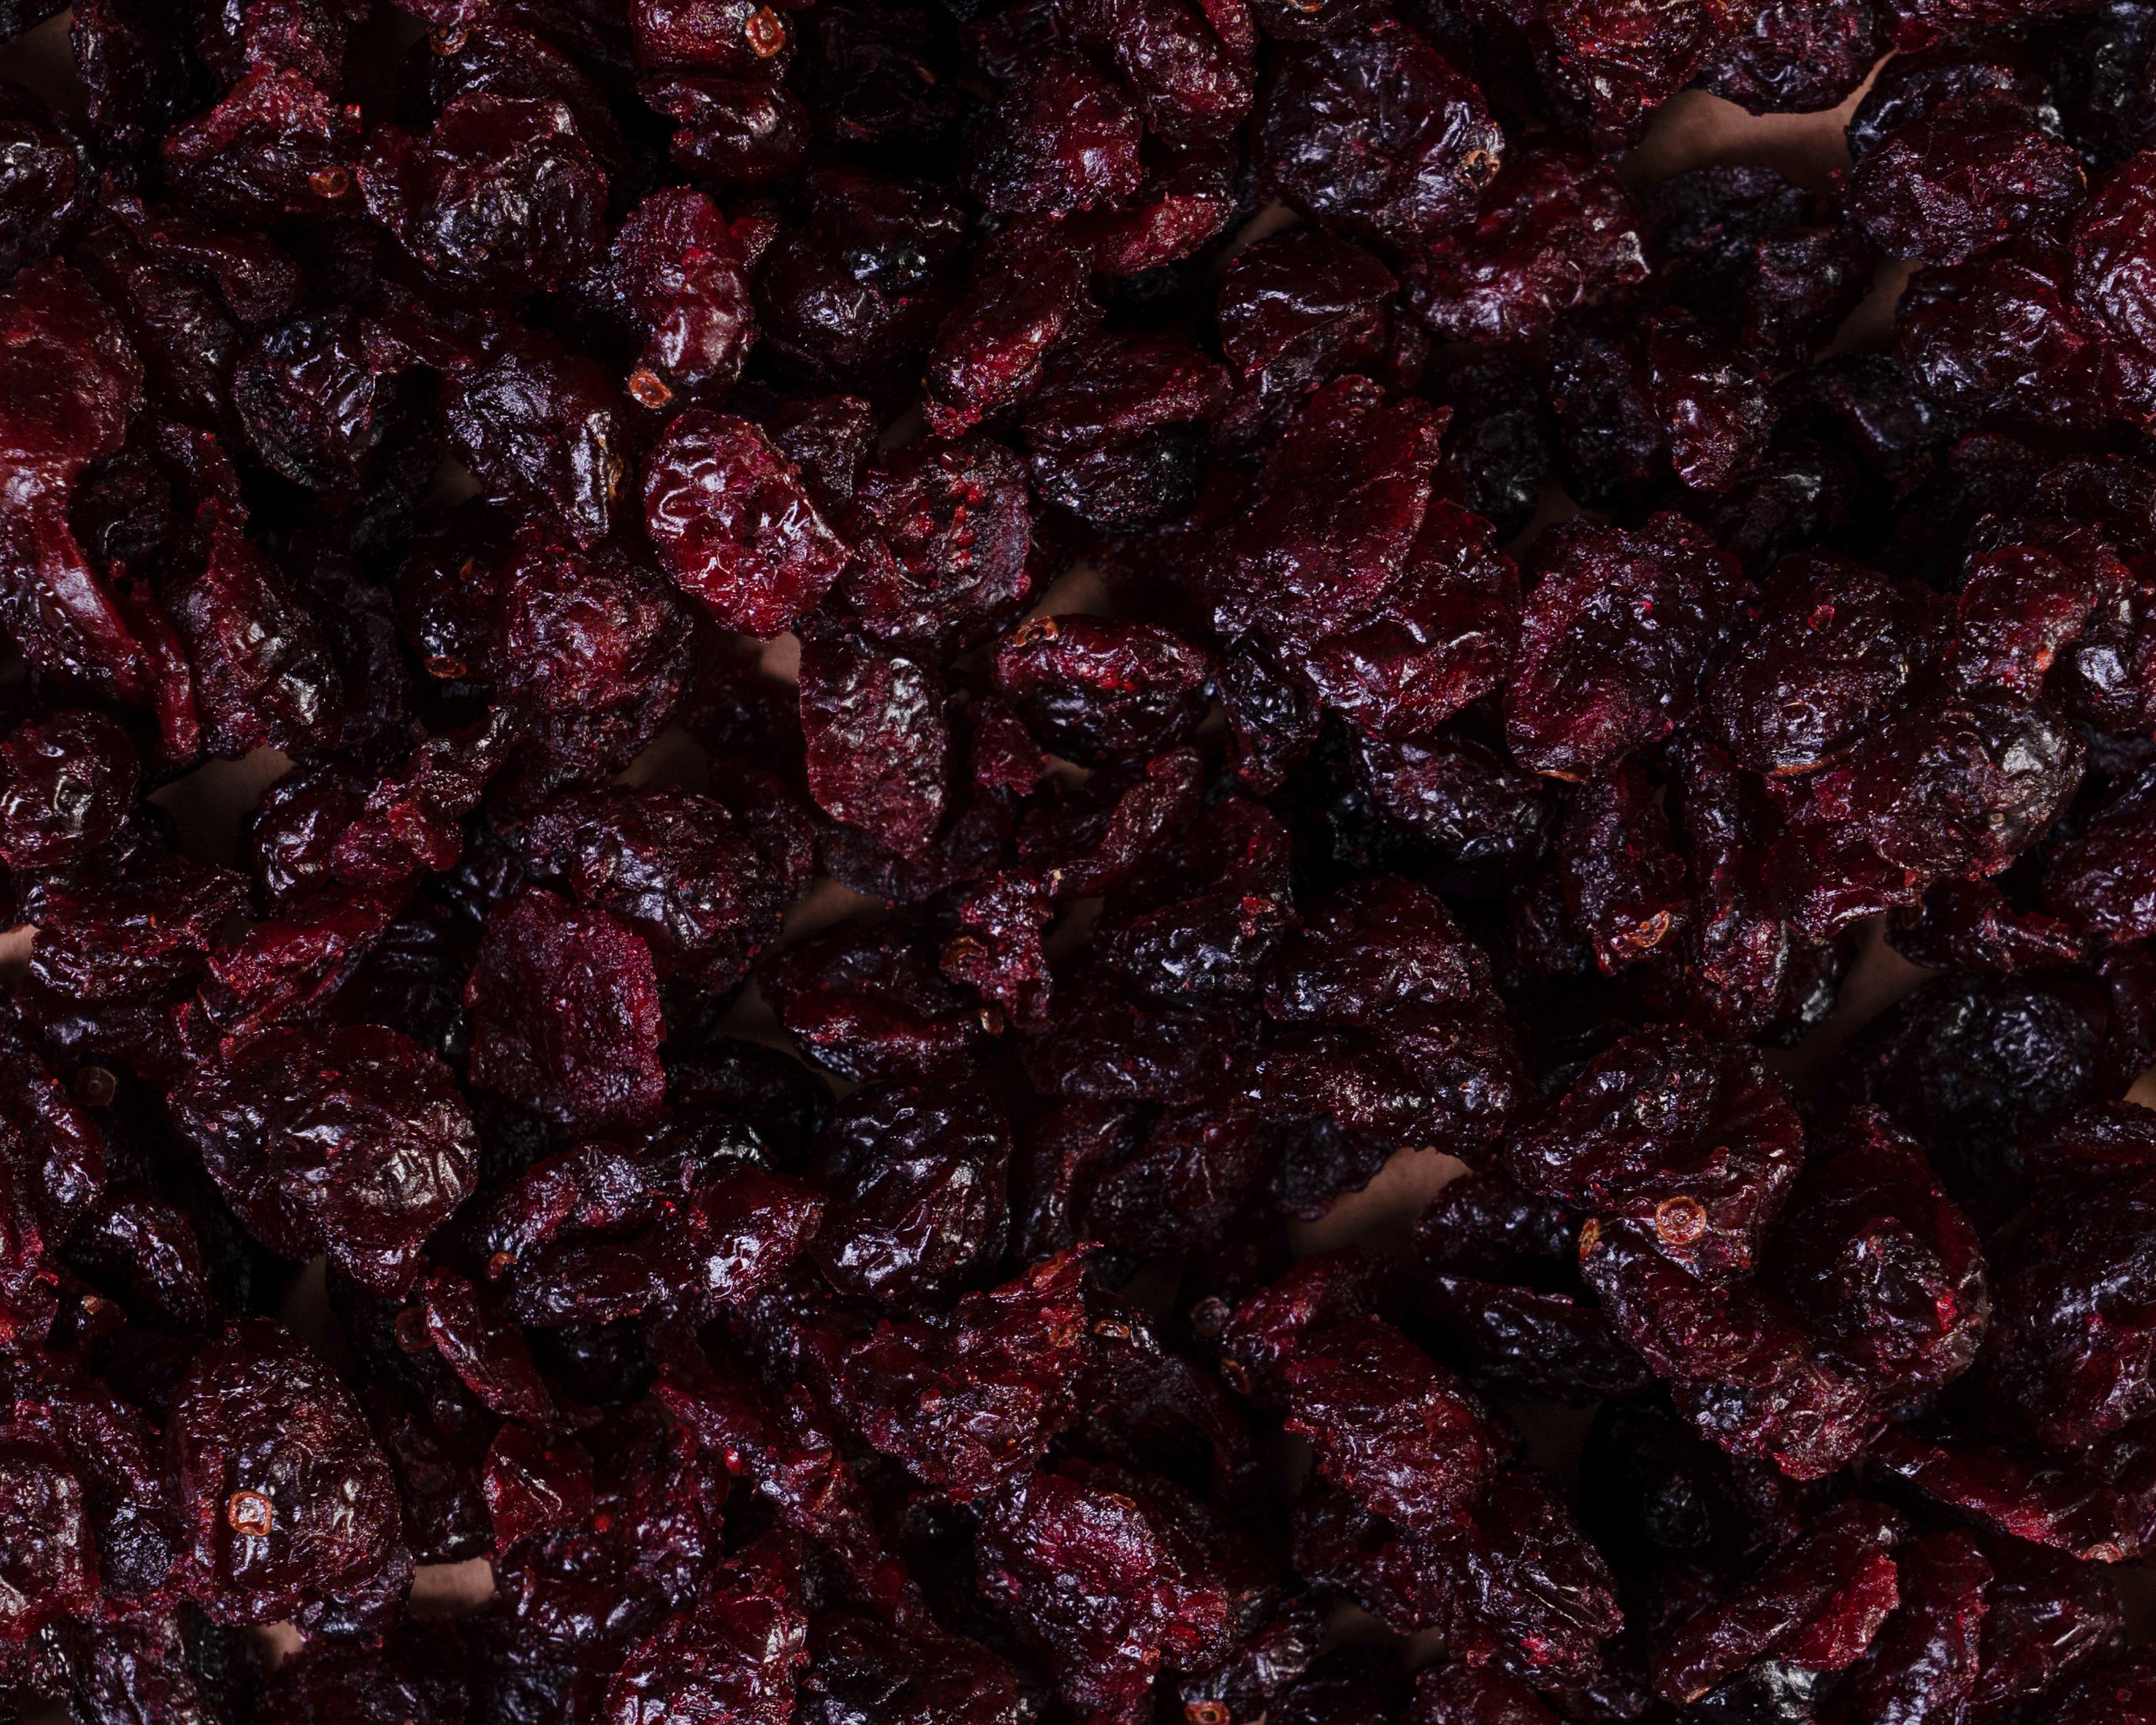 Getrocknete Cranberries bio als Nahaufnahme